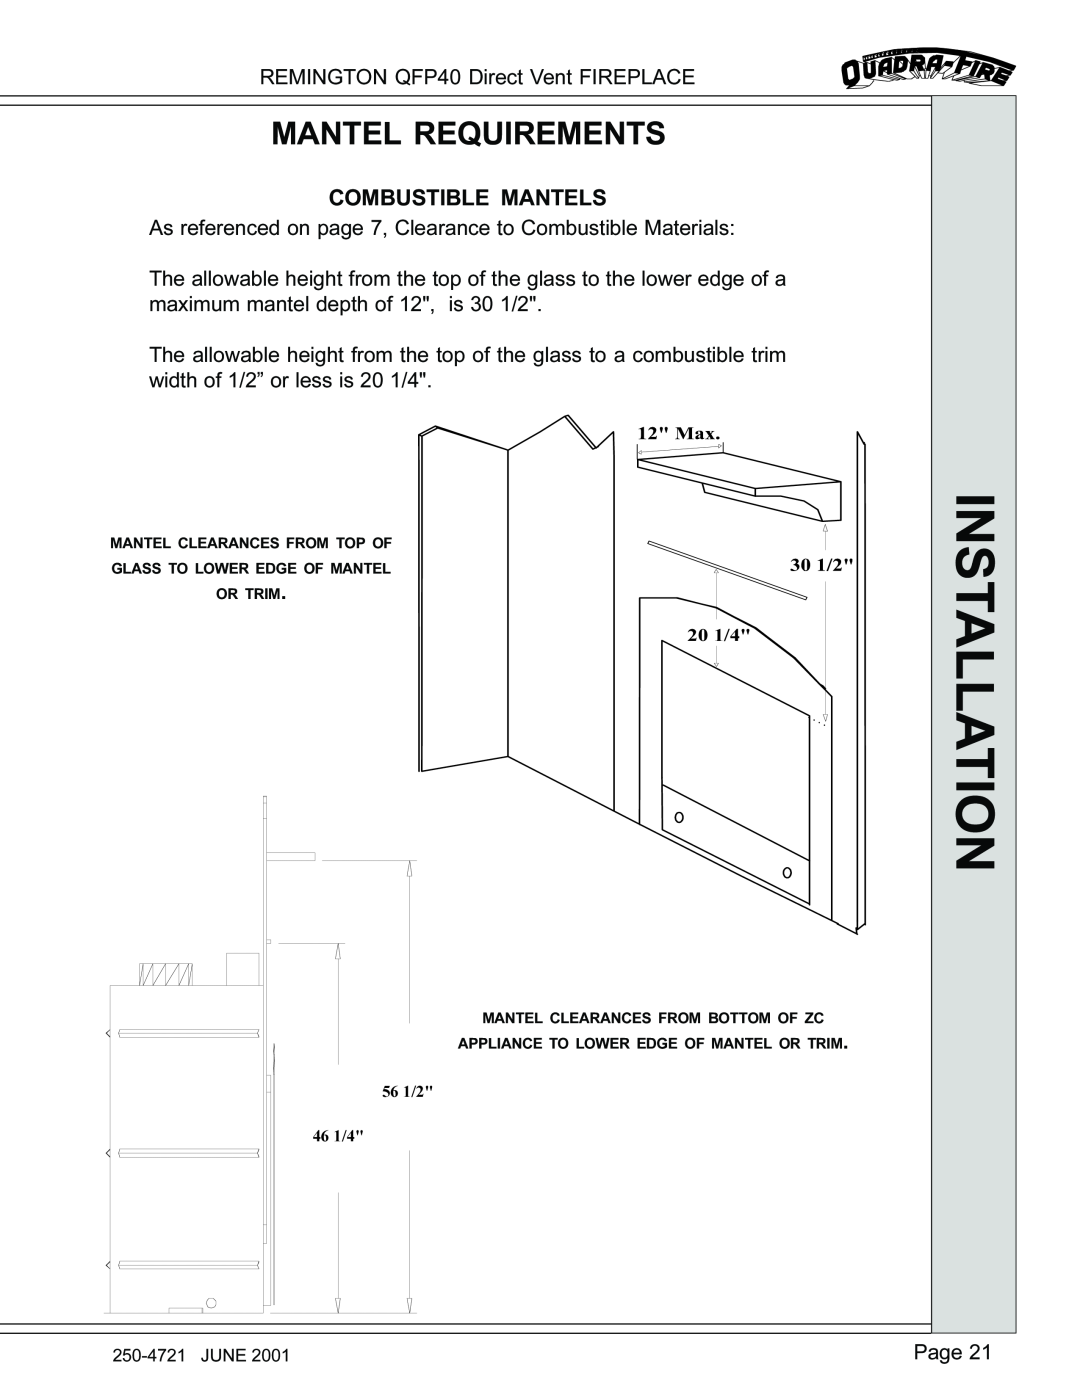 Remington QFP40 manual Mantel Requirements, Combustible Mantels, Installation 